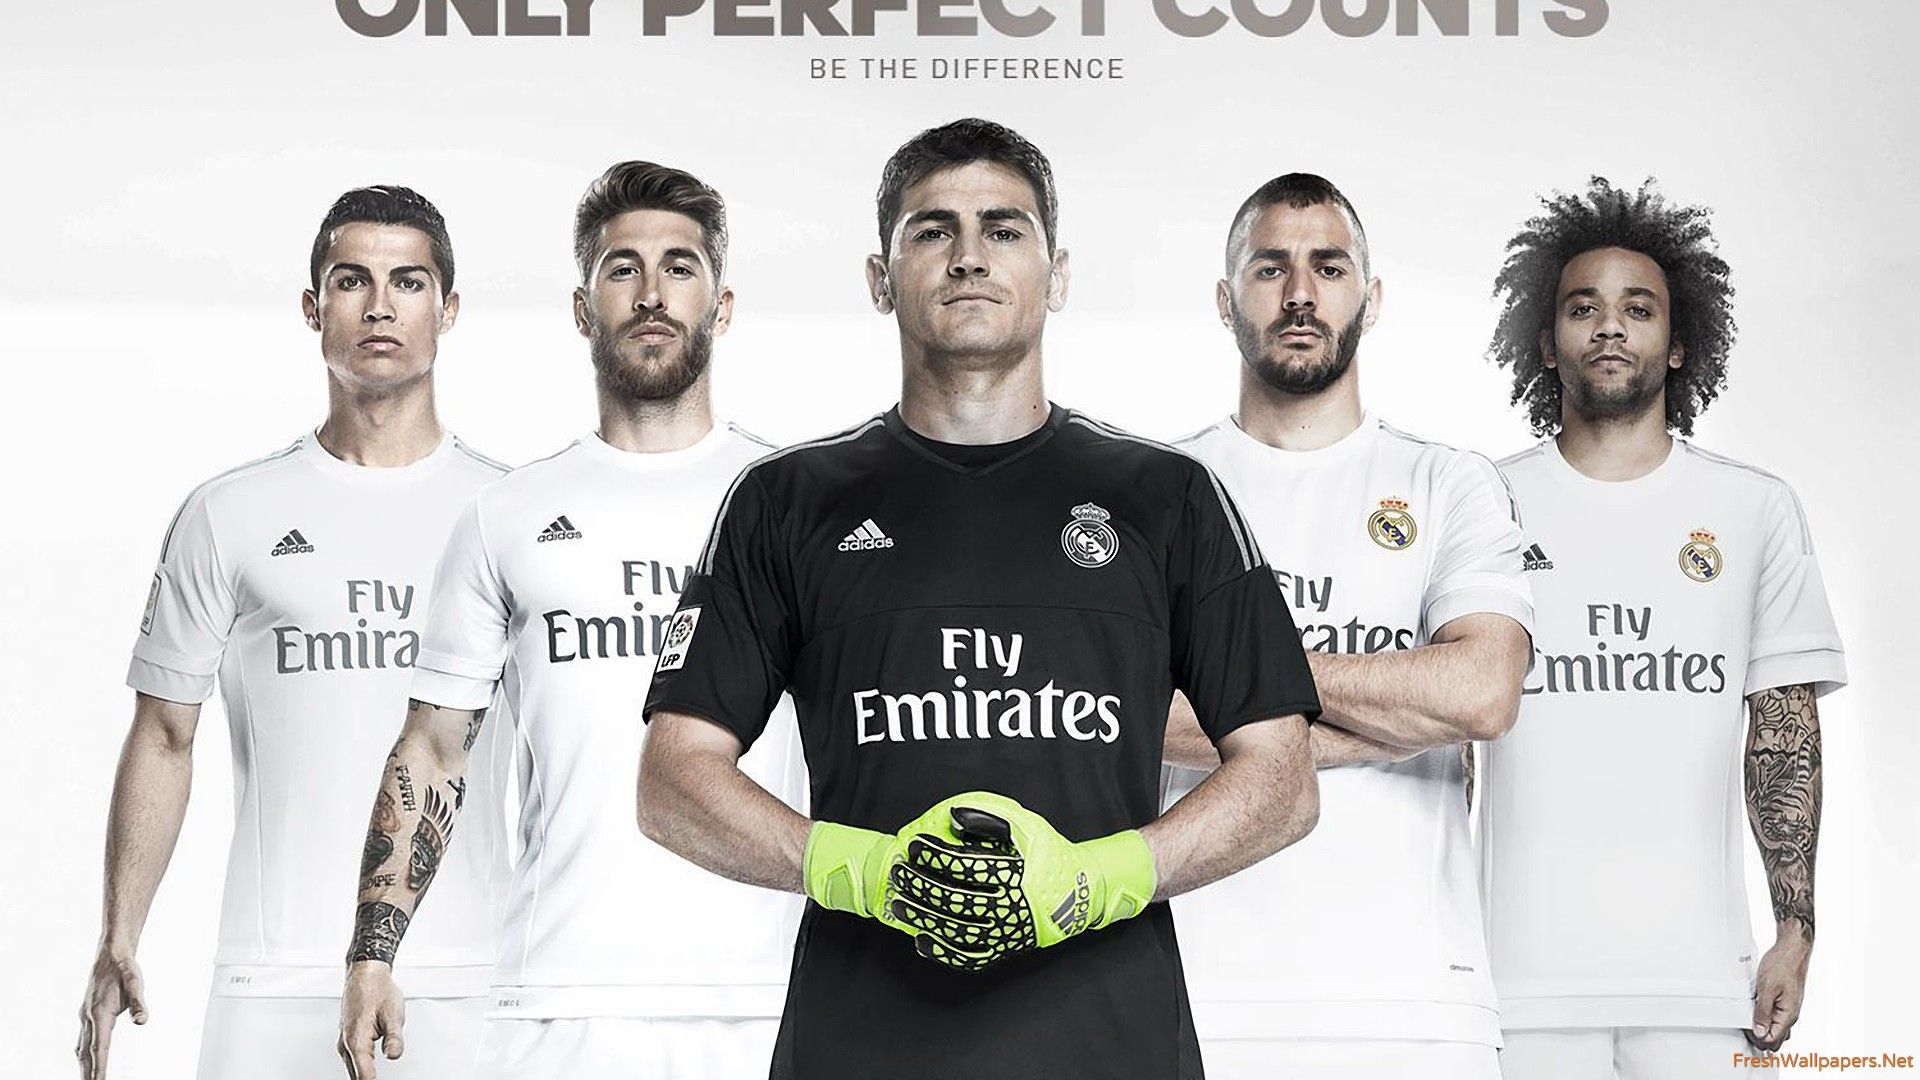 Real Madrid CF 2015-2016 Adidas Home Kit wallpapers | Freshwallpapers